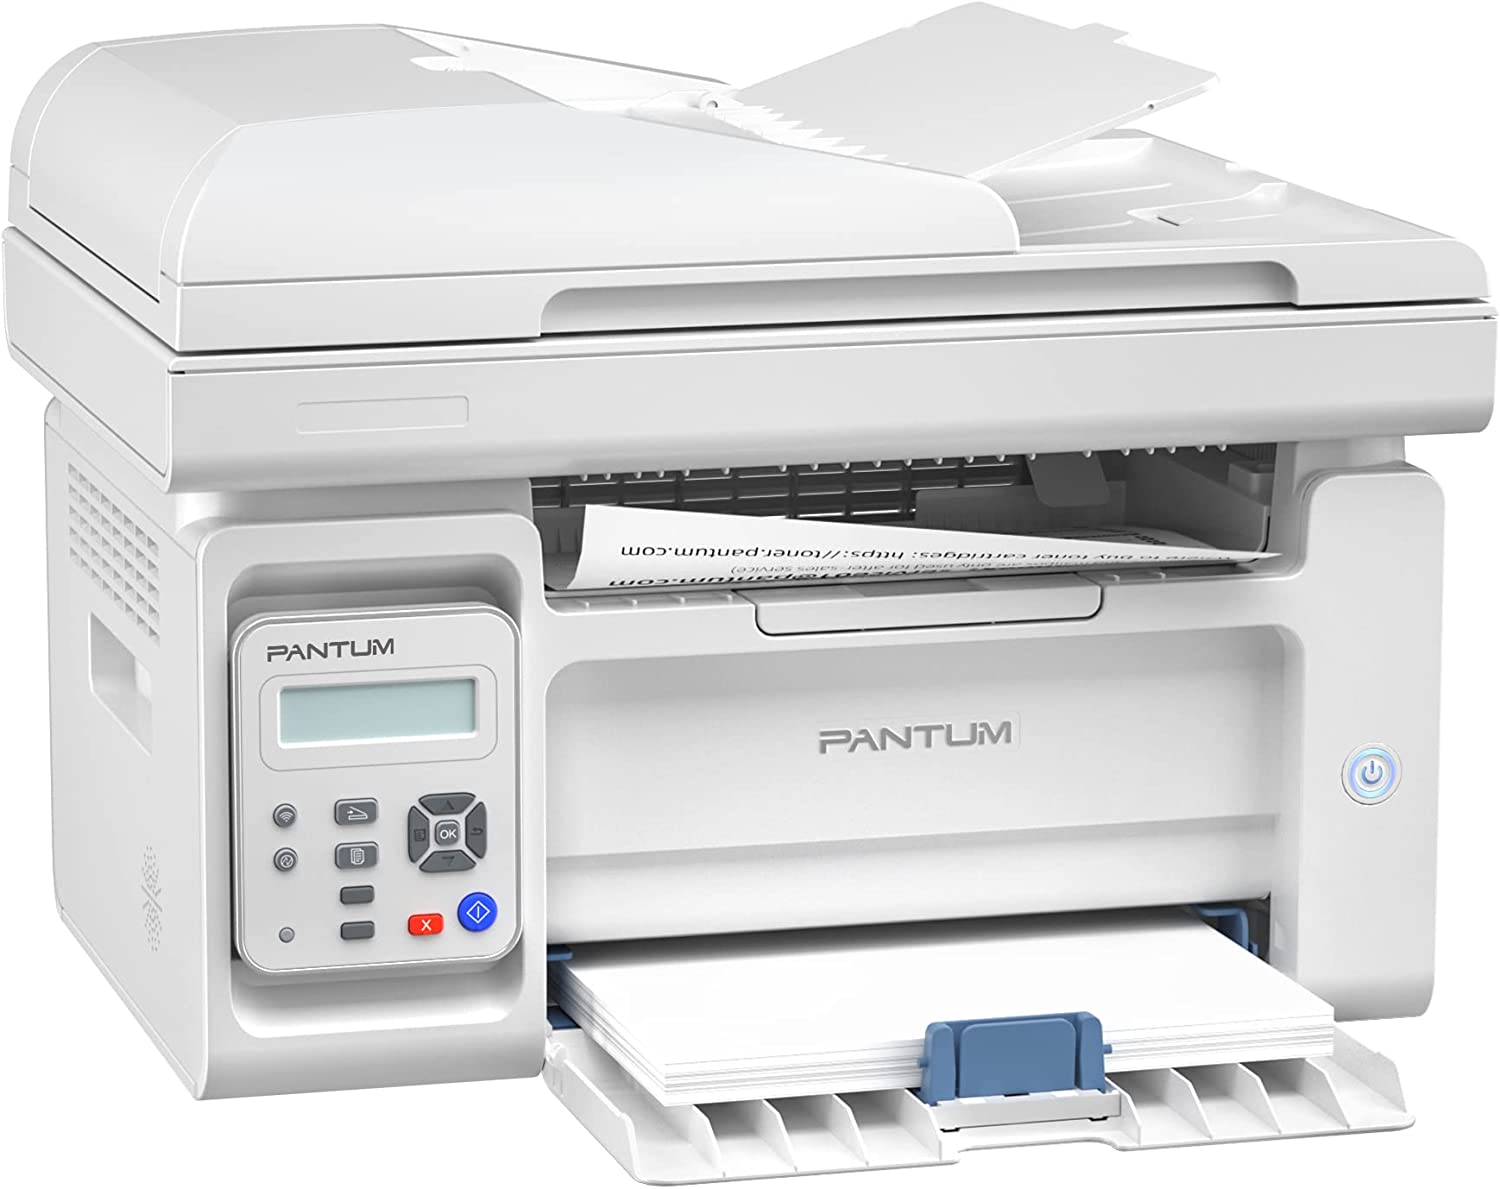 Pantum M6552NW All in One Laser Printer Scanner Copier [...]